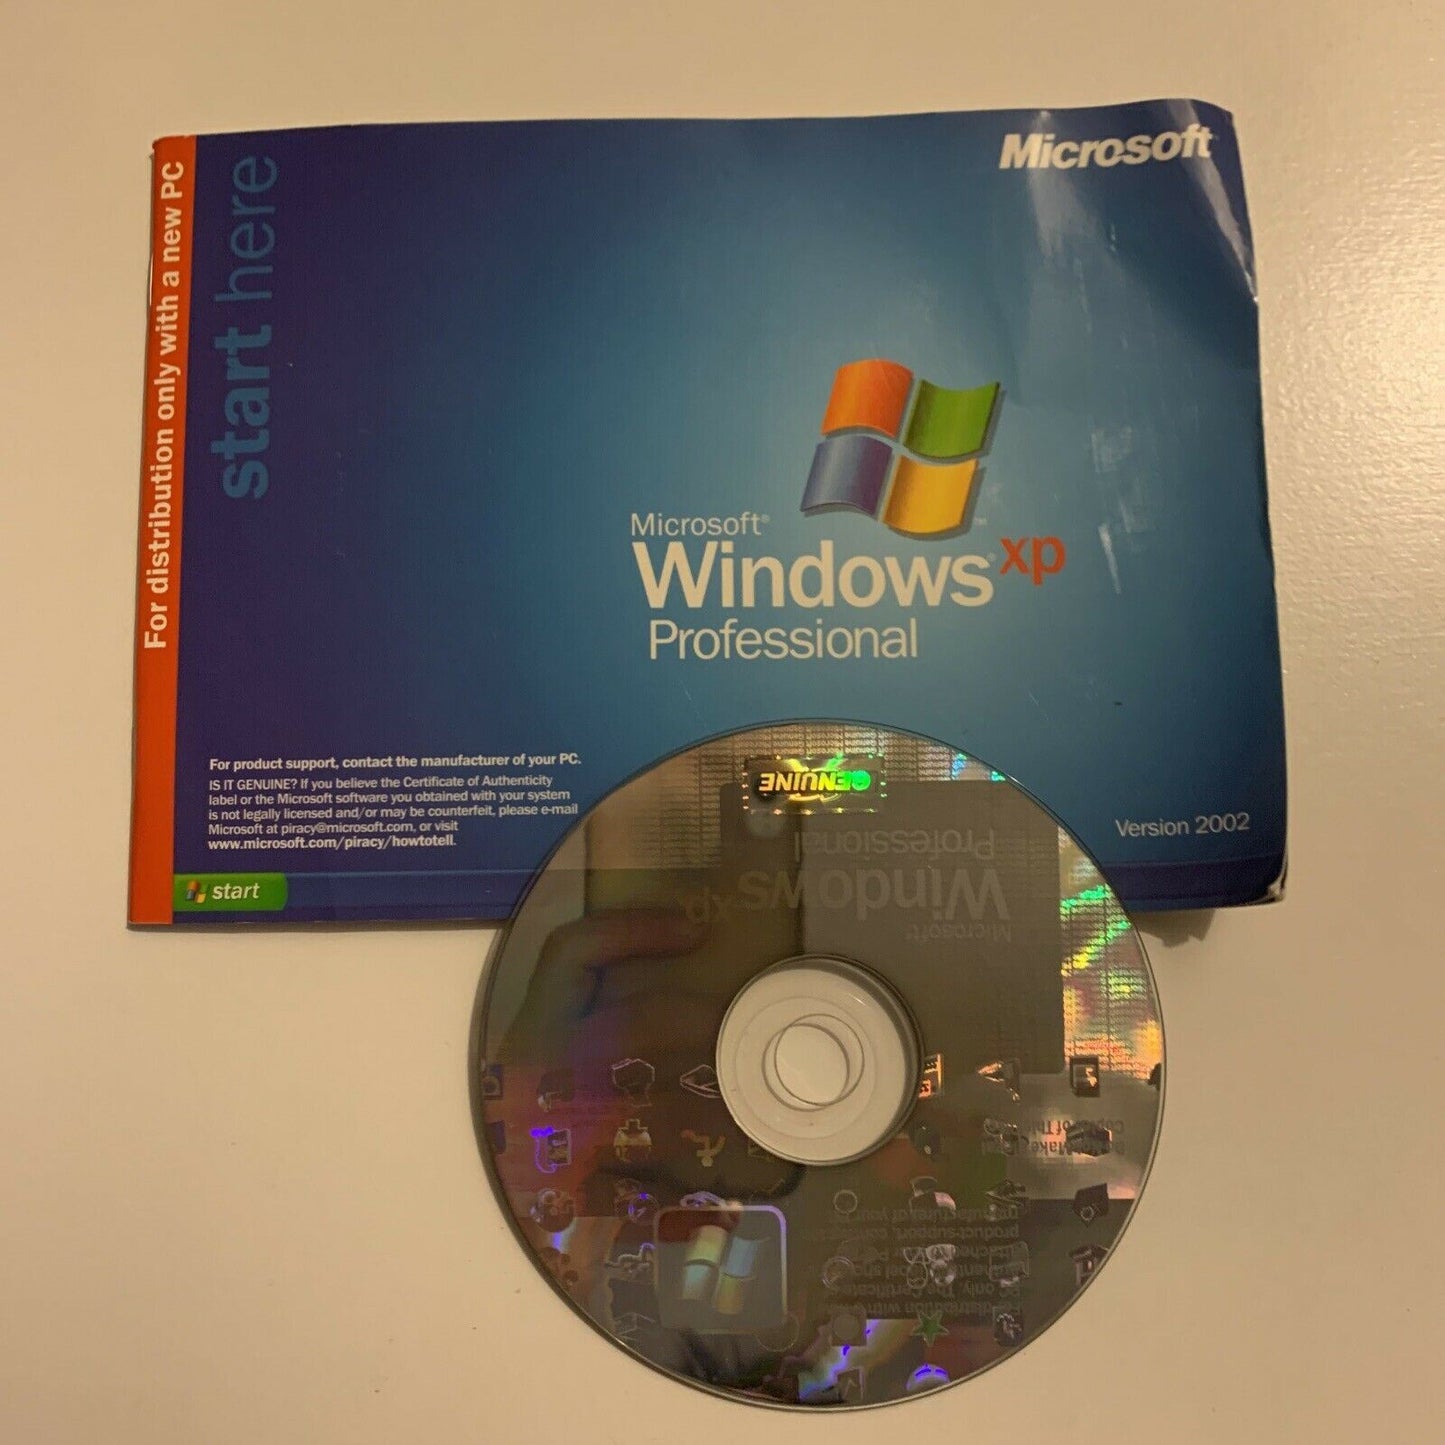 Microsoft Windows XP Professional 2002 version